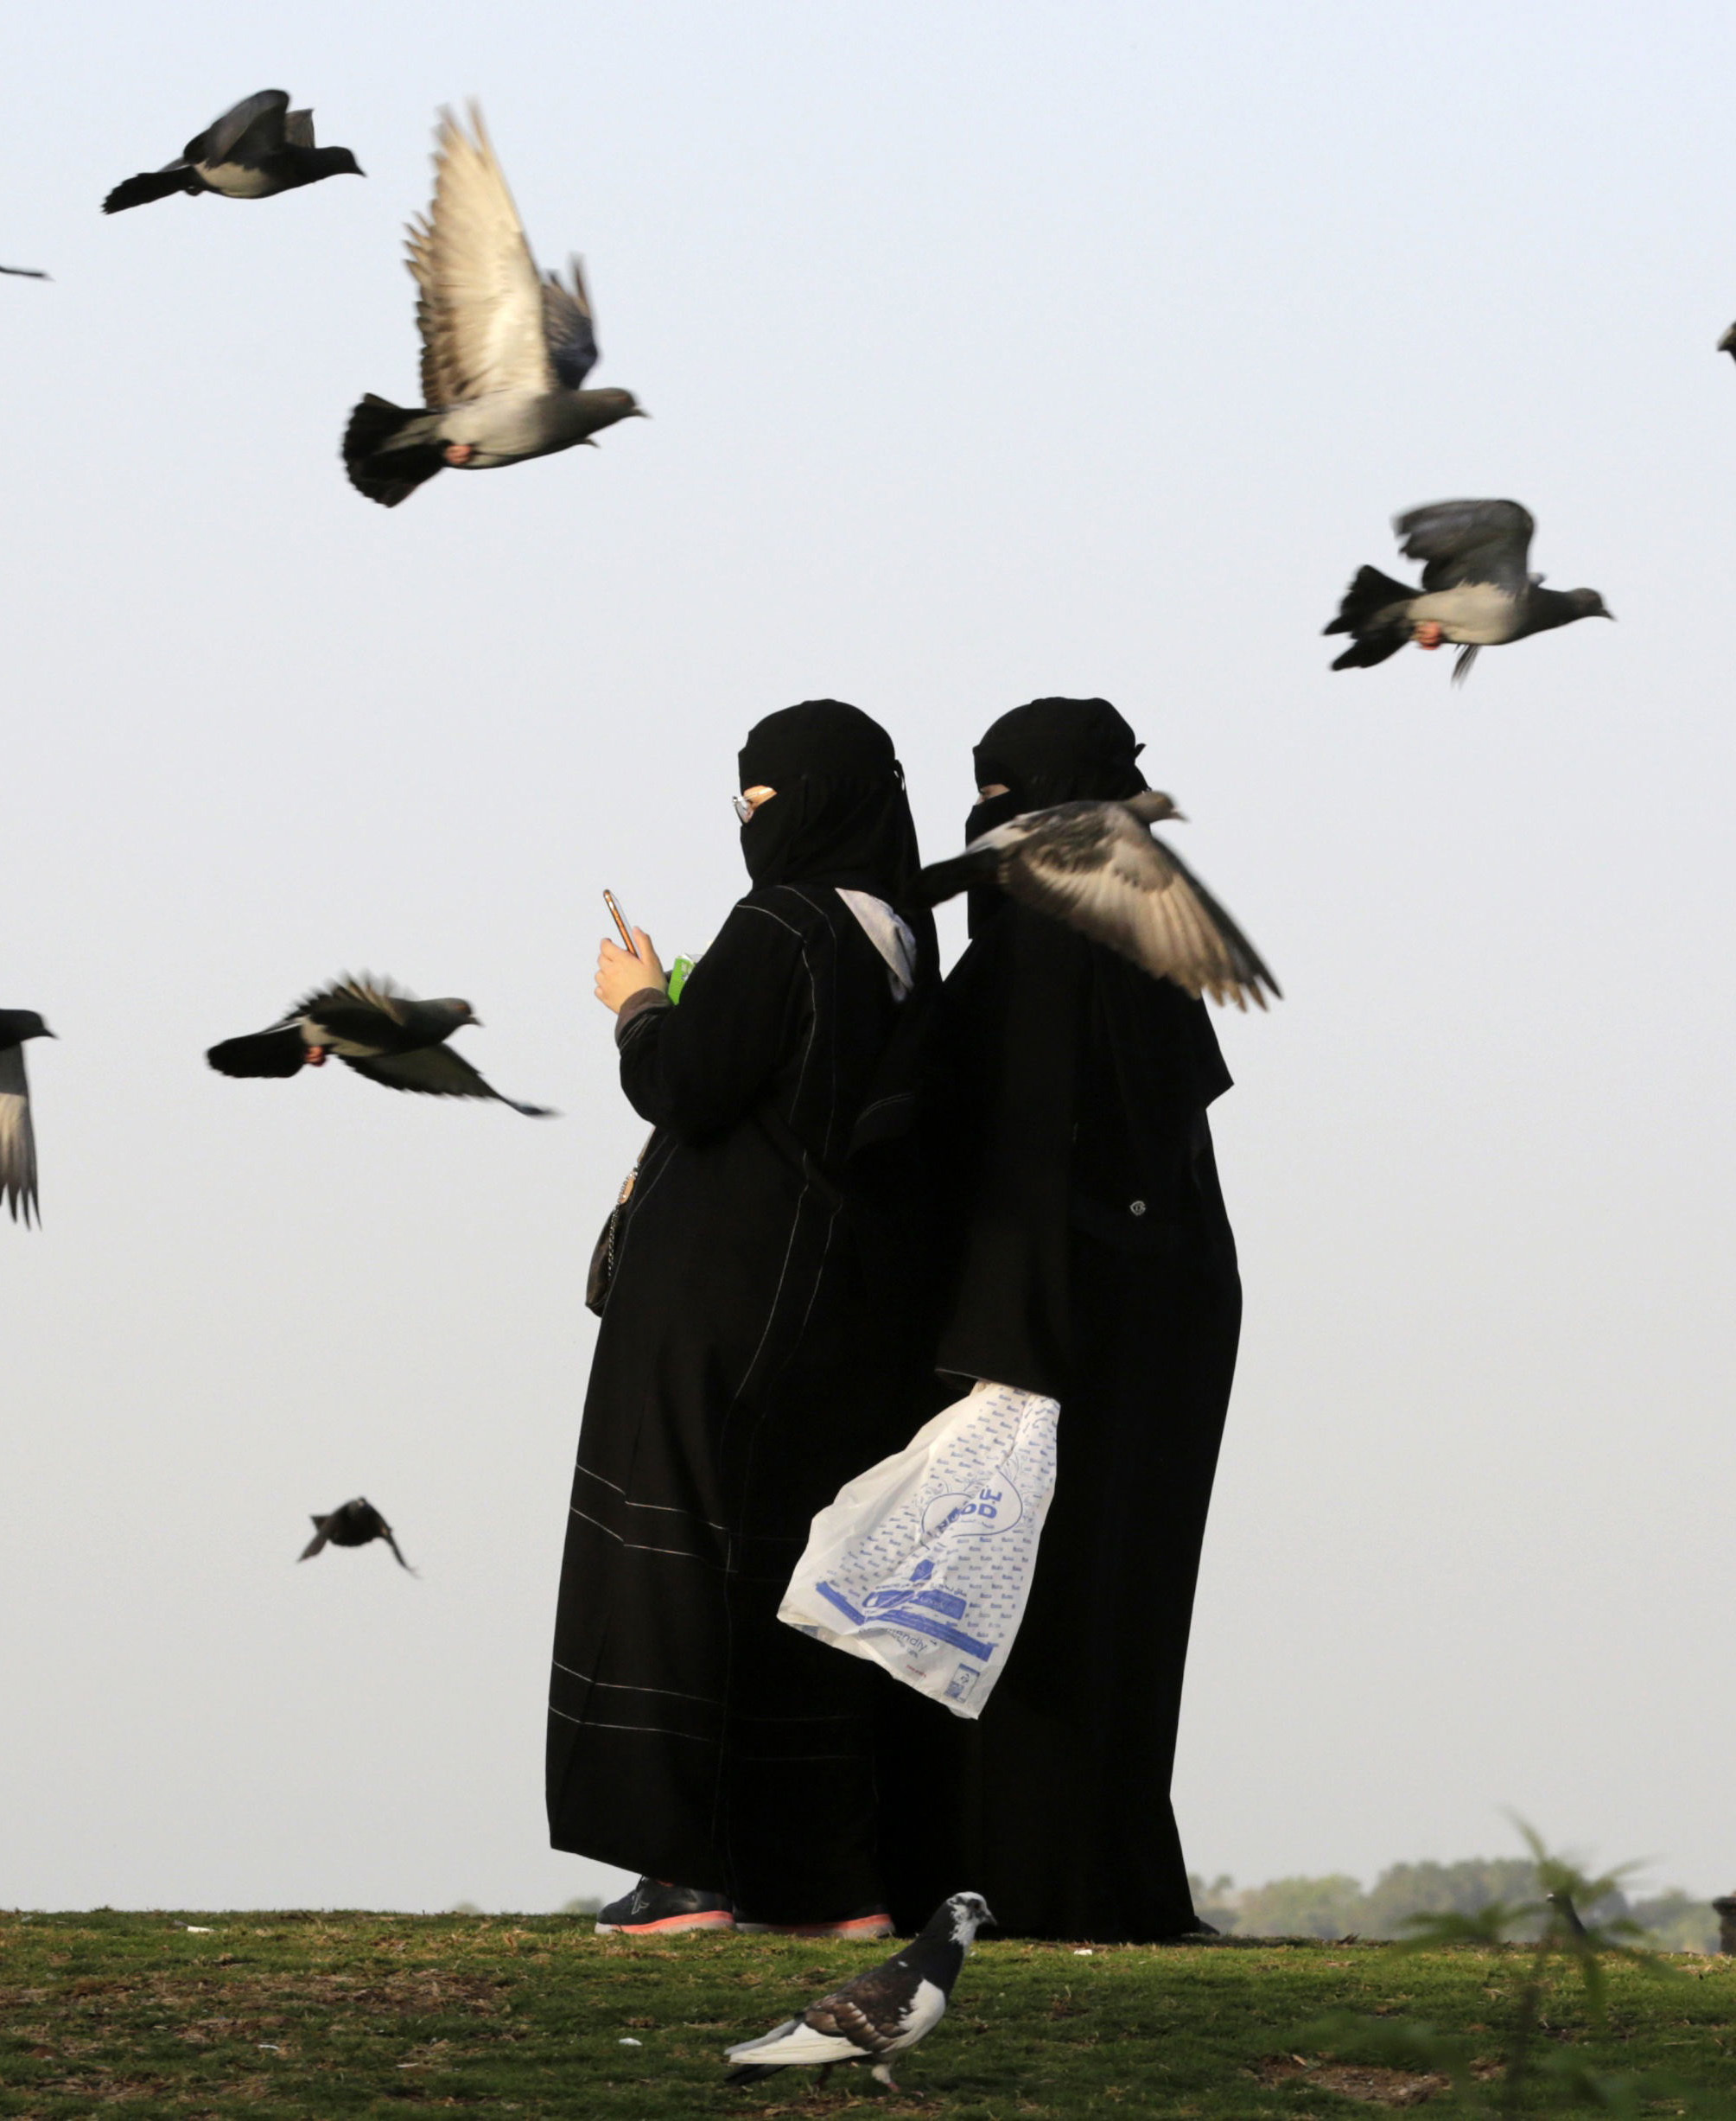 Saudi women film pigeons at a public garden in Jiddah, Saudi Arabia, ahead of International Women’s Day Picture: AMR NABIL/AP